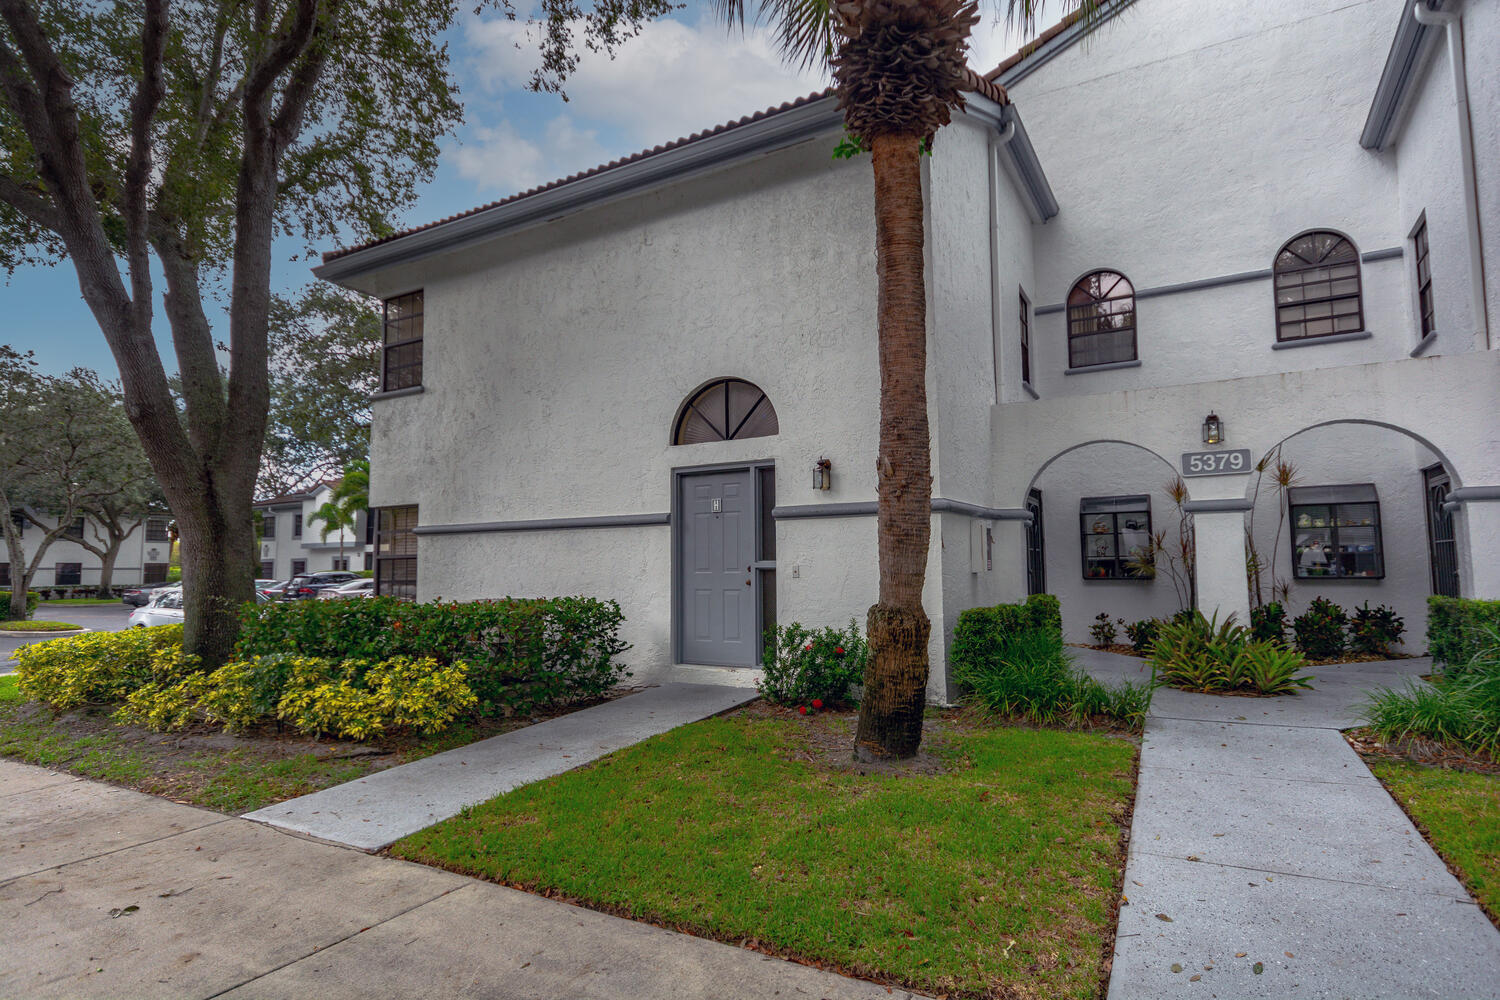 Property for Sale at 5379 Verona Drive H, Boynton Beach, Palm Beach County, Florida - Bedrooms: 3 
Bathrooms: 2  - $315,000